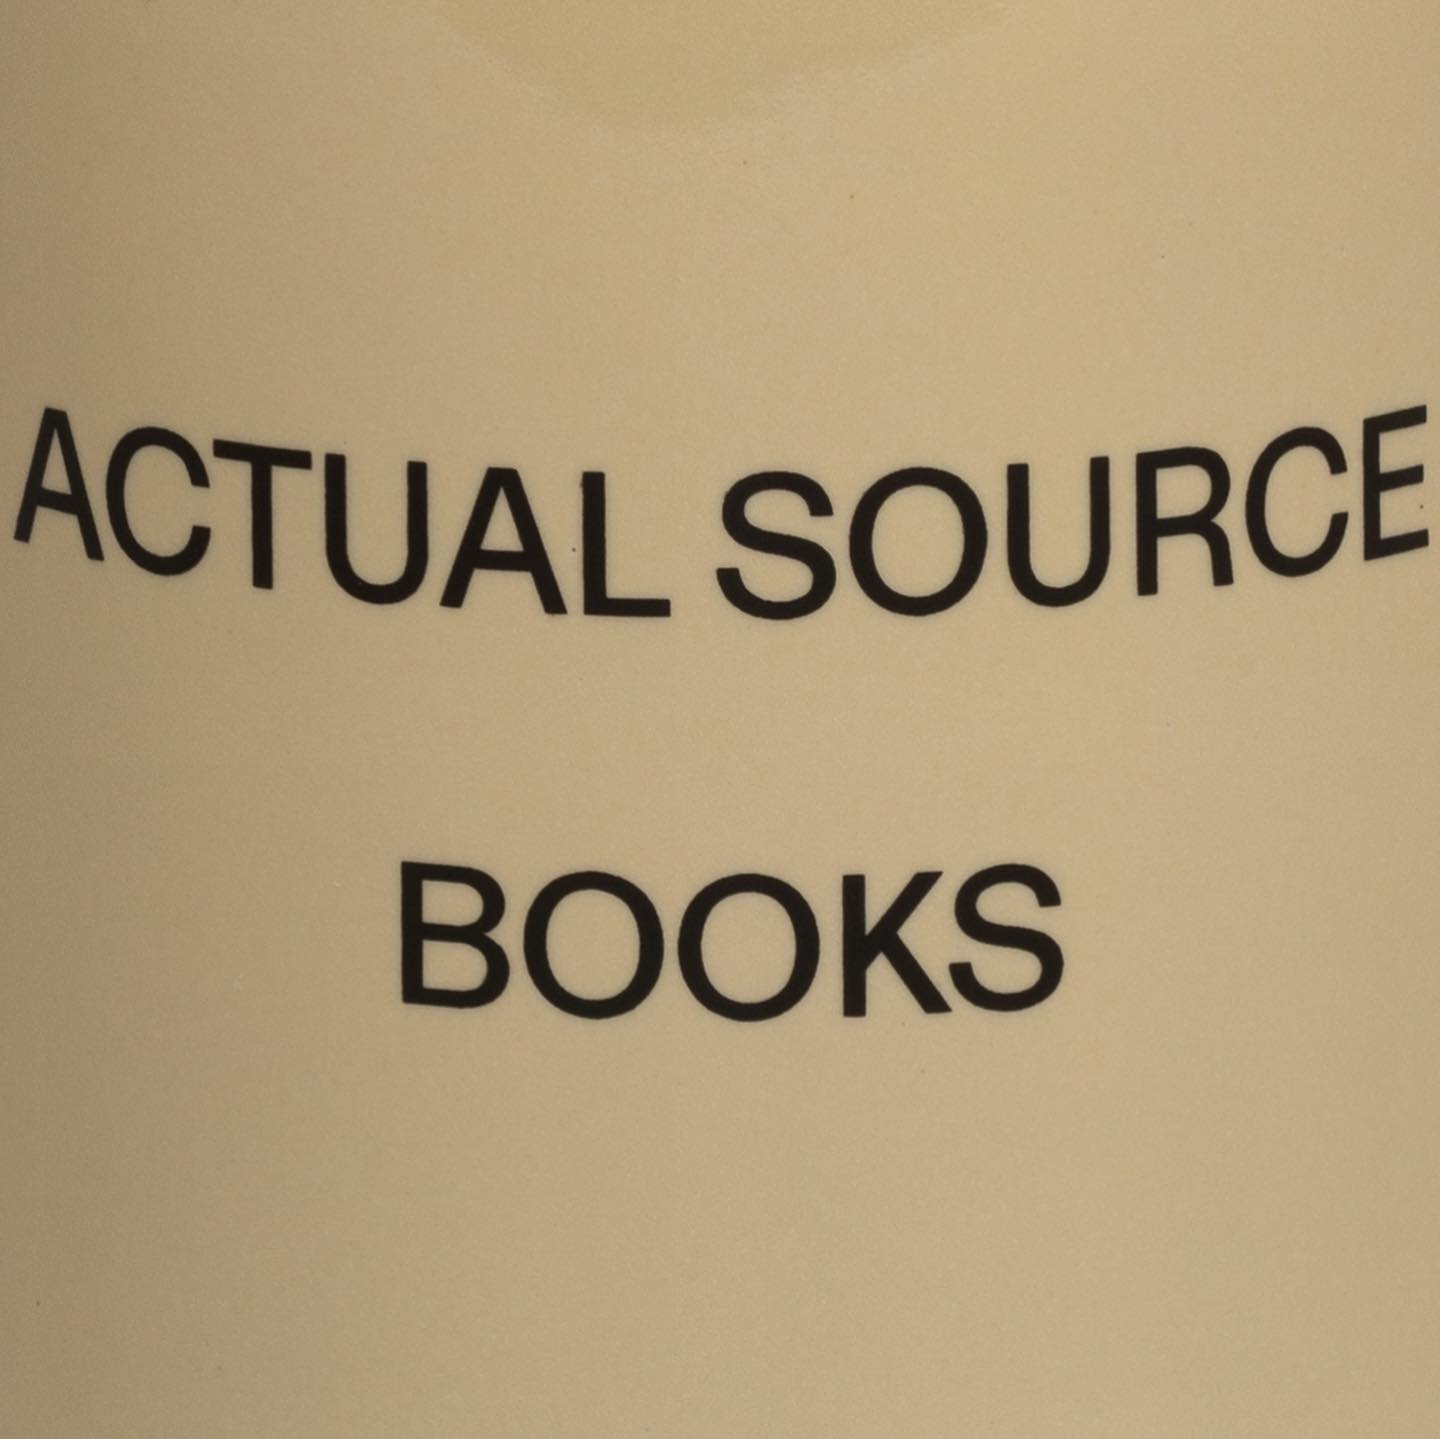 Actual Source Books Mug